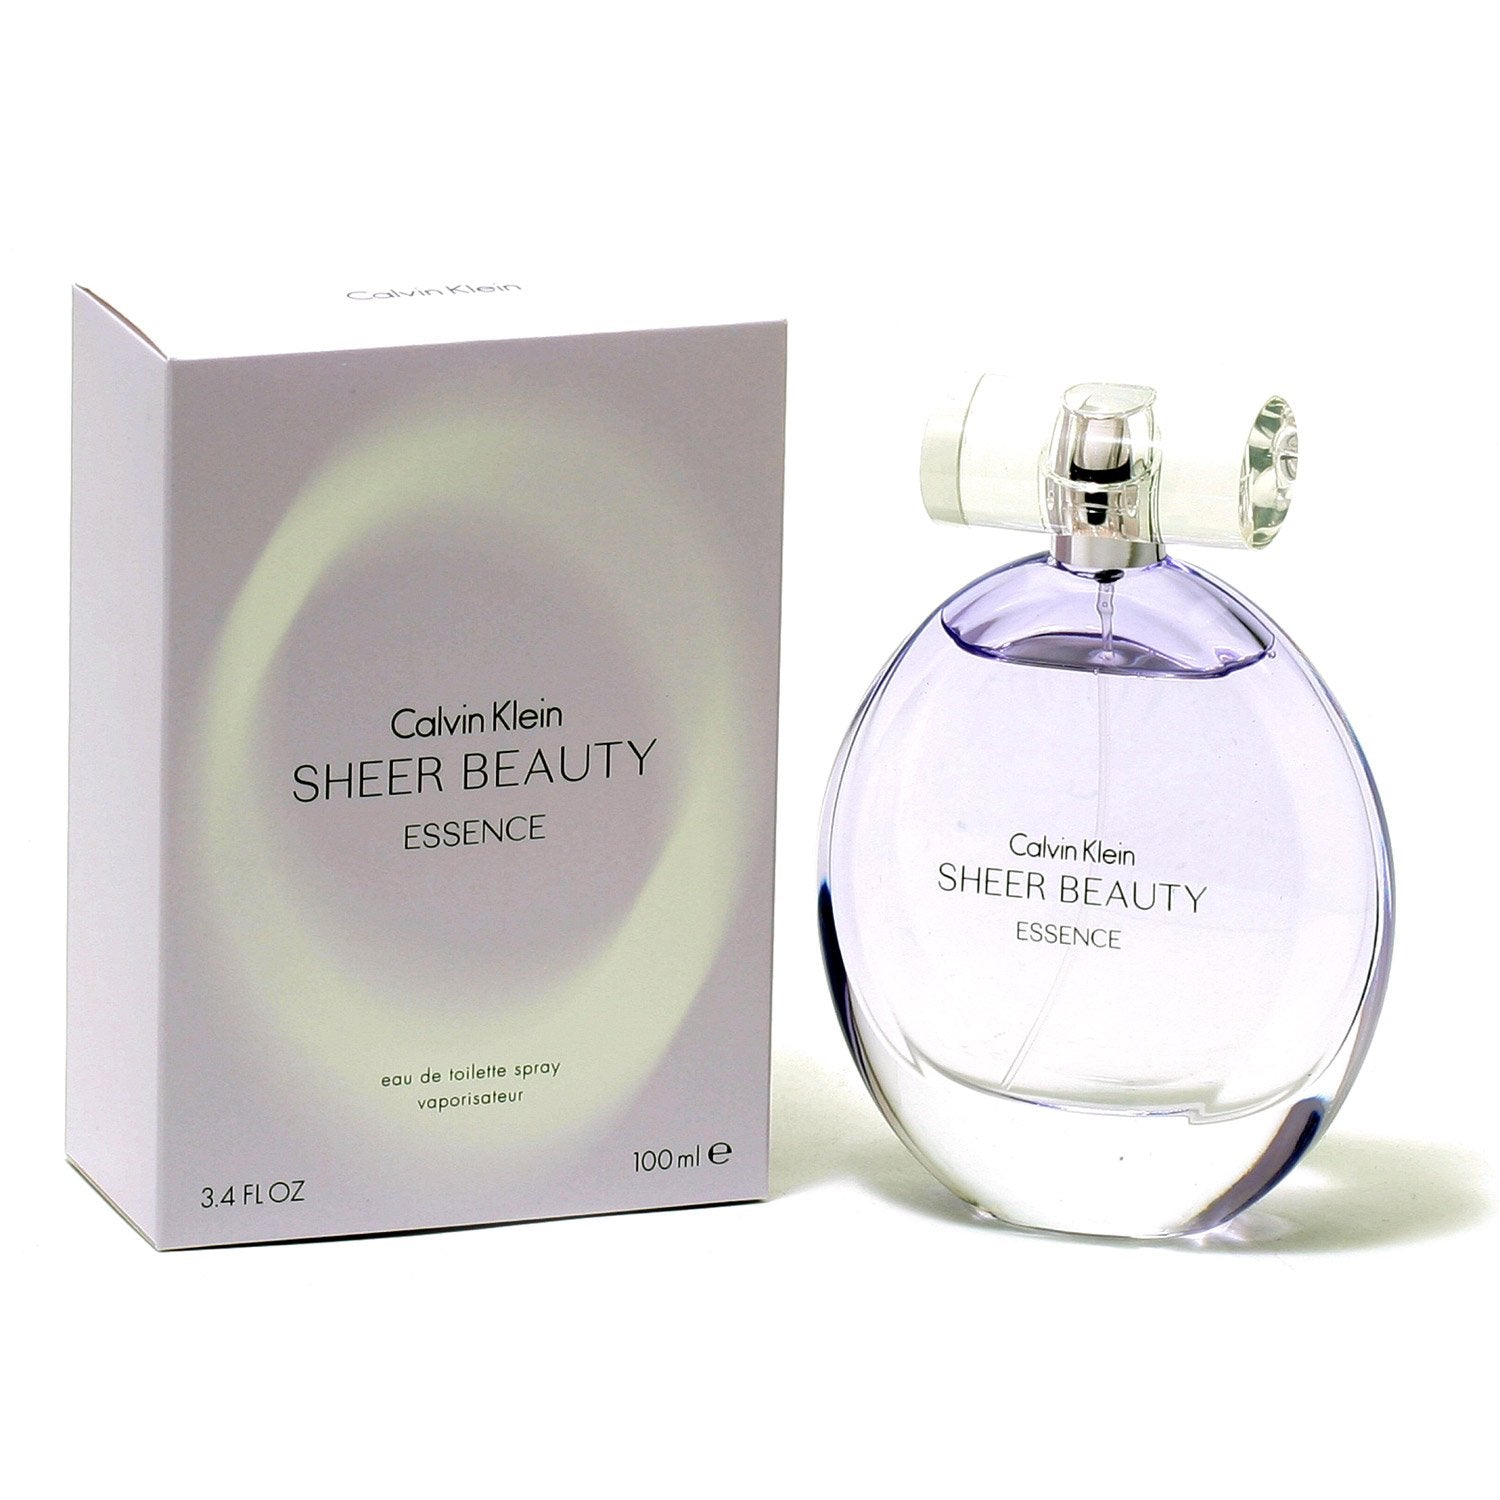 Perfume - CALVIN KLEIN SHEER BEAUTY ESSENCE FOR WOMEN - EAU DE TOILETTE SPRAY, 3.4 OZ